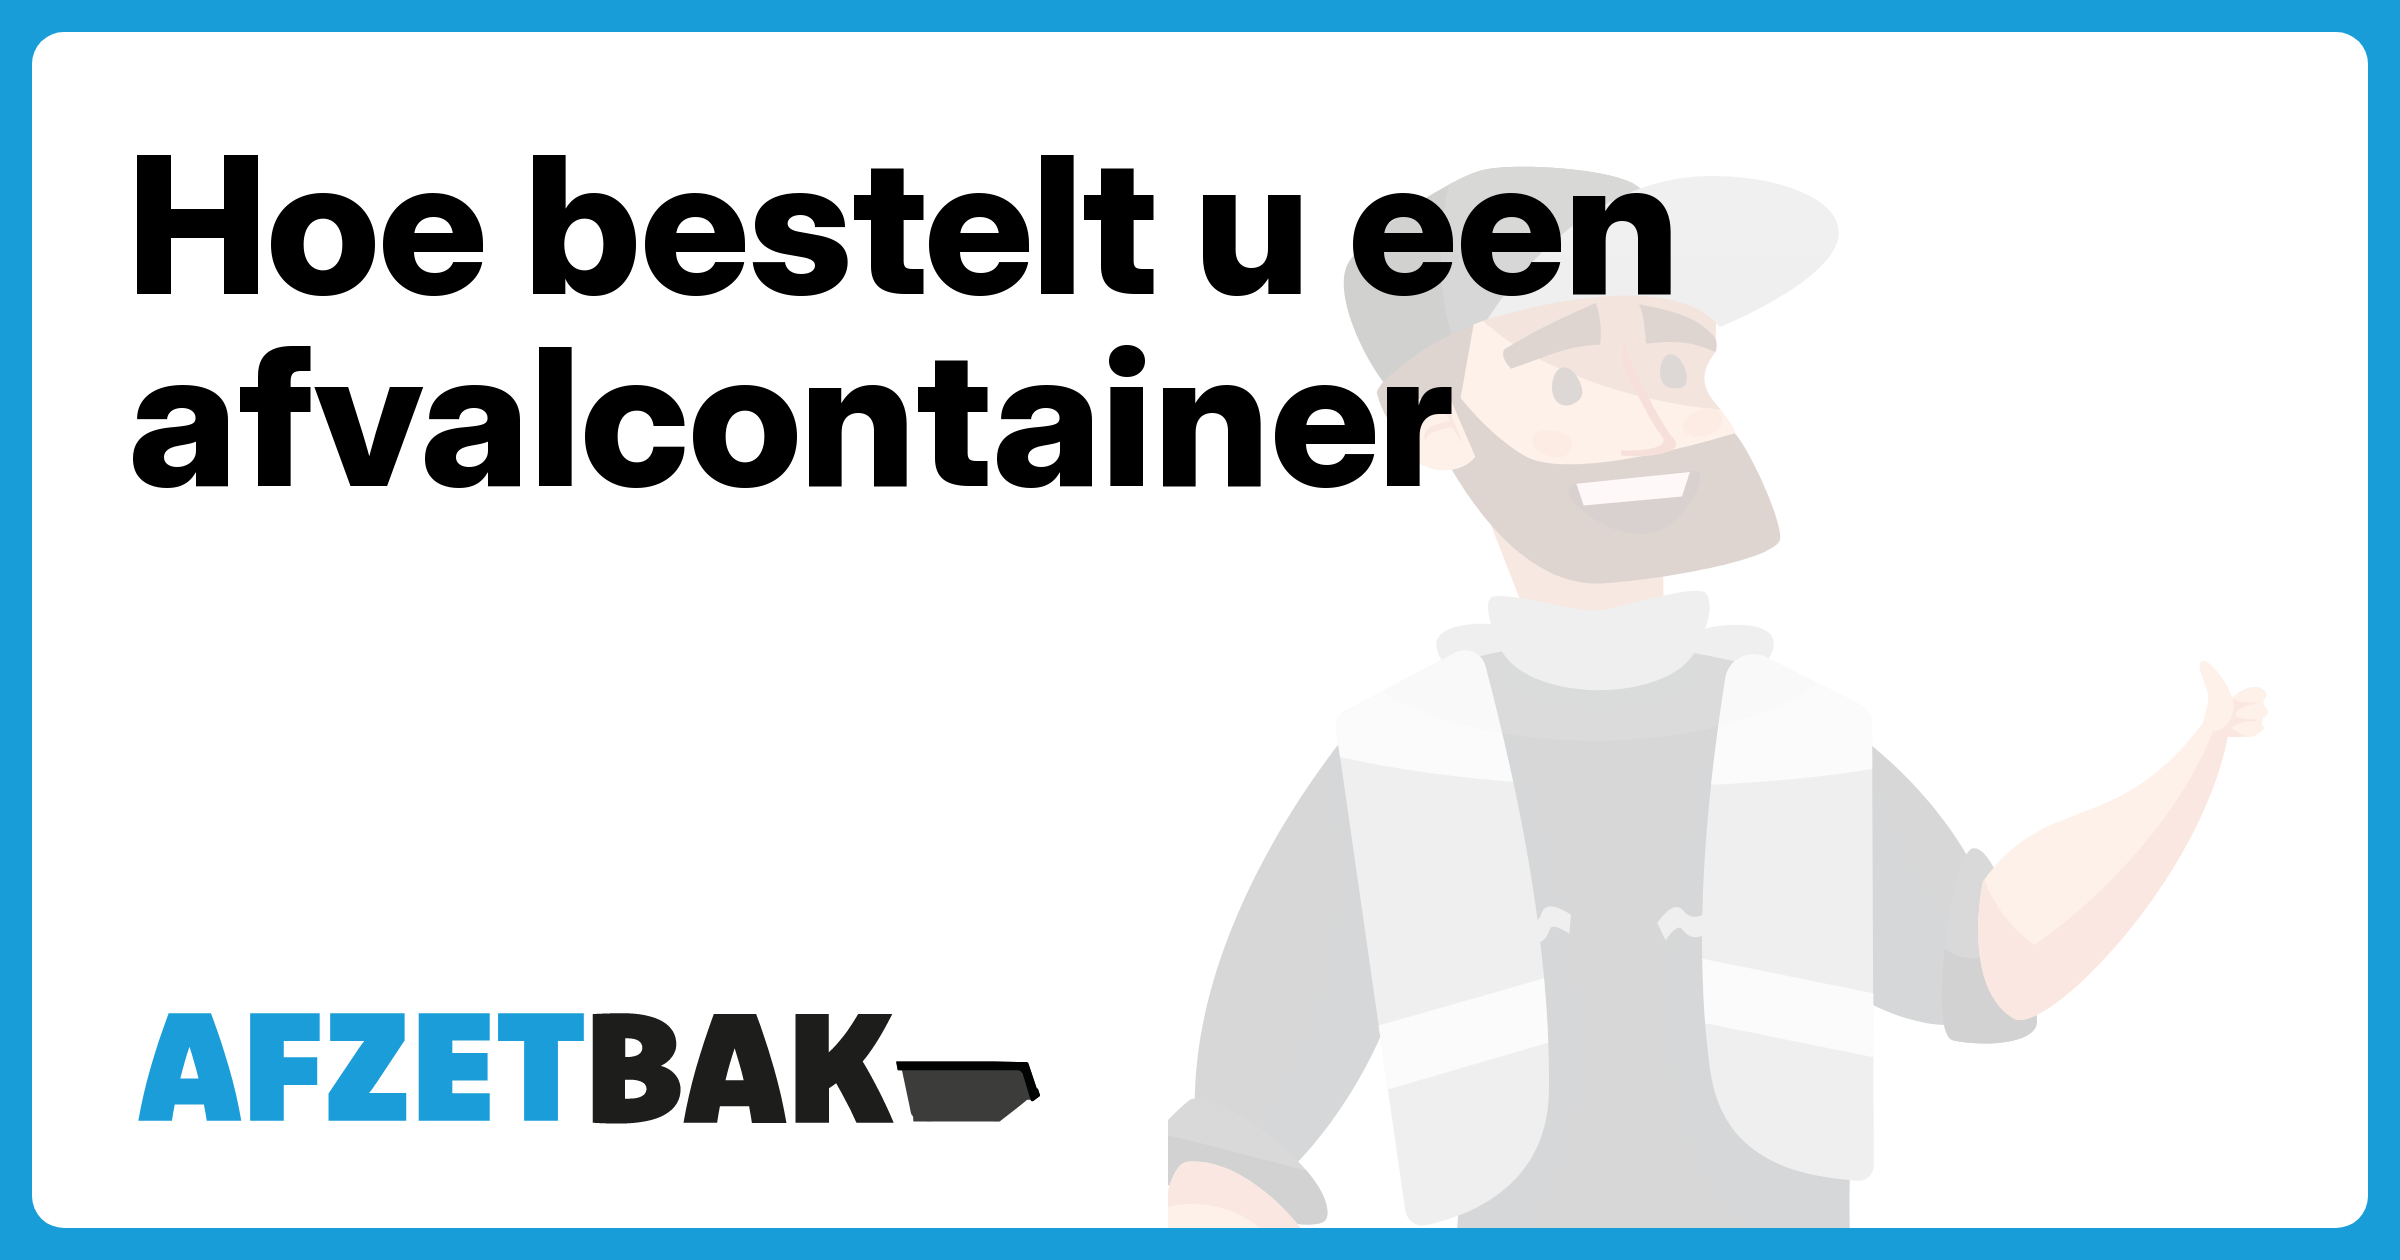 Hoe bestelt u een afvalcontainer - Afzetbak.nl